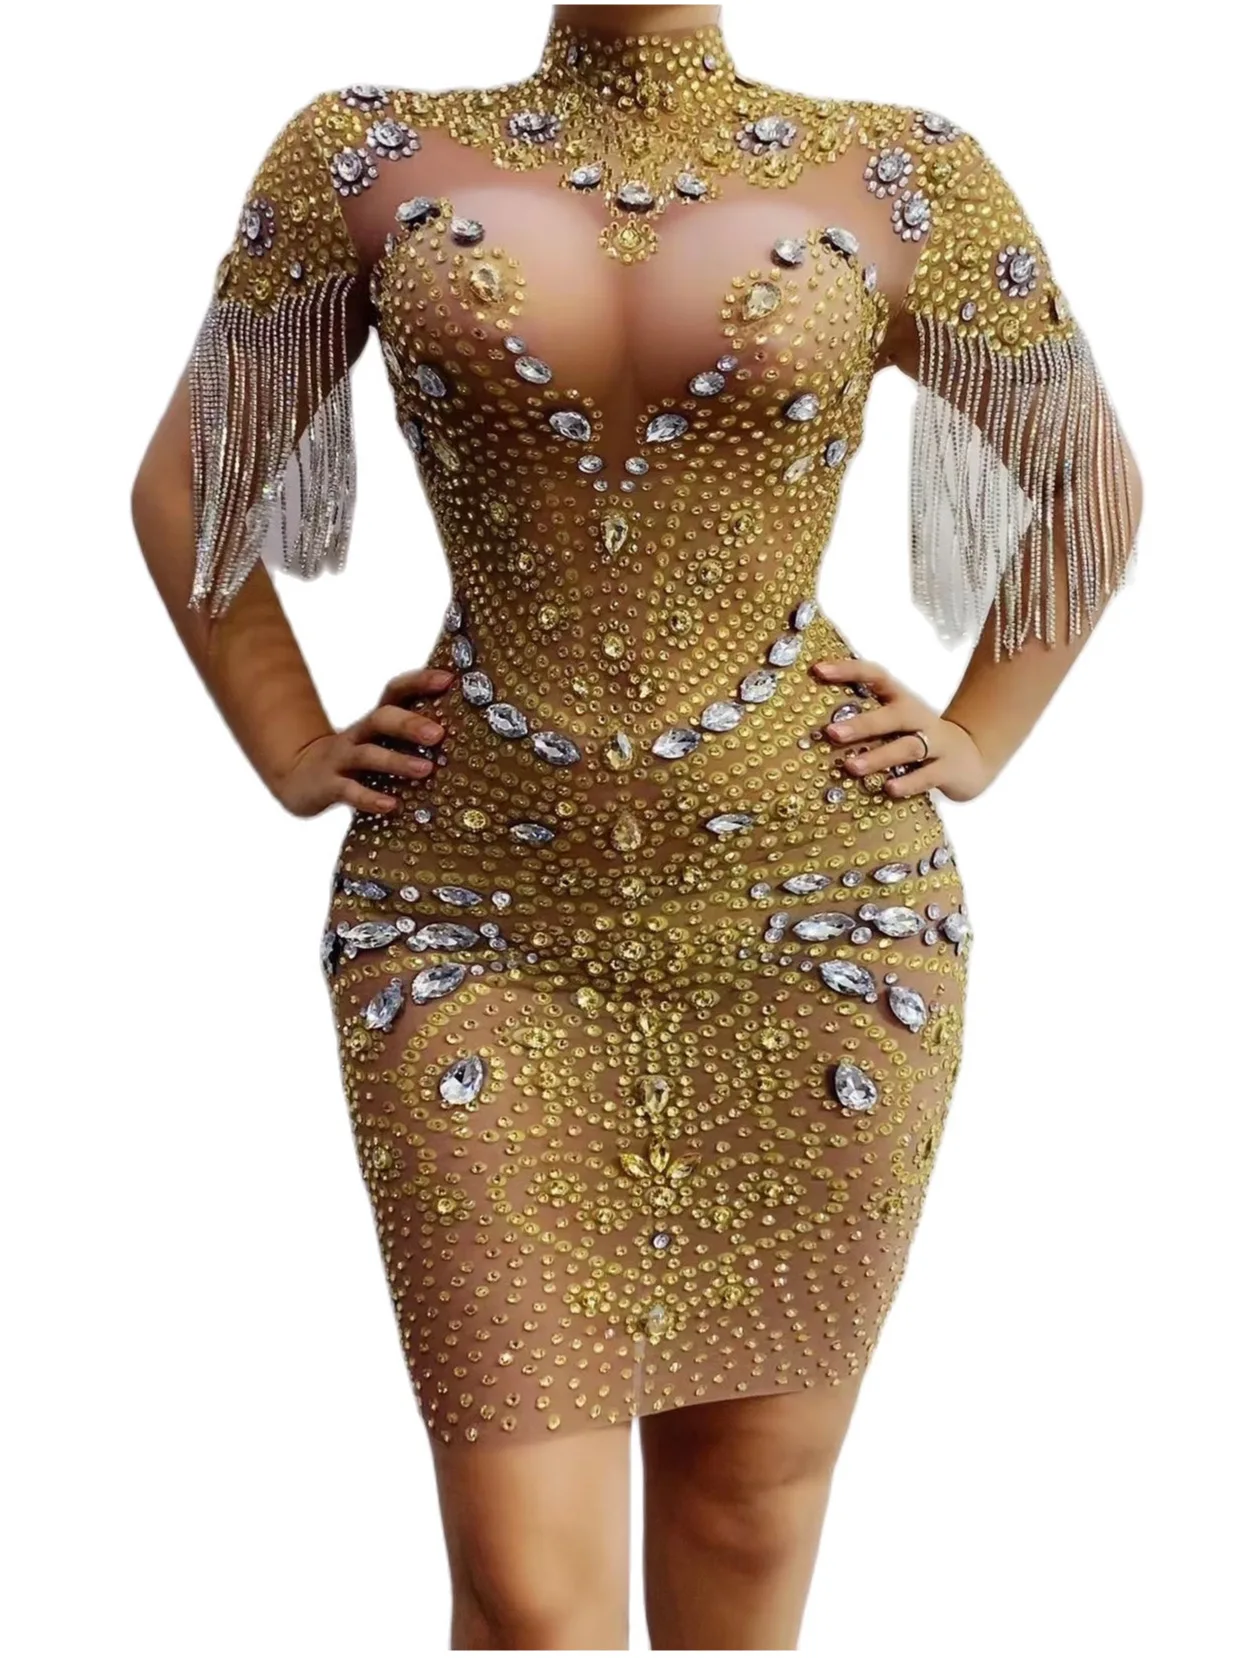 

Gold Shining Rhinestones Crystal Tassel Sexy Sheath Dress For Women Nightclub Party Clothing Singer Stage Coachella Costumes